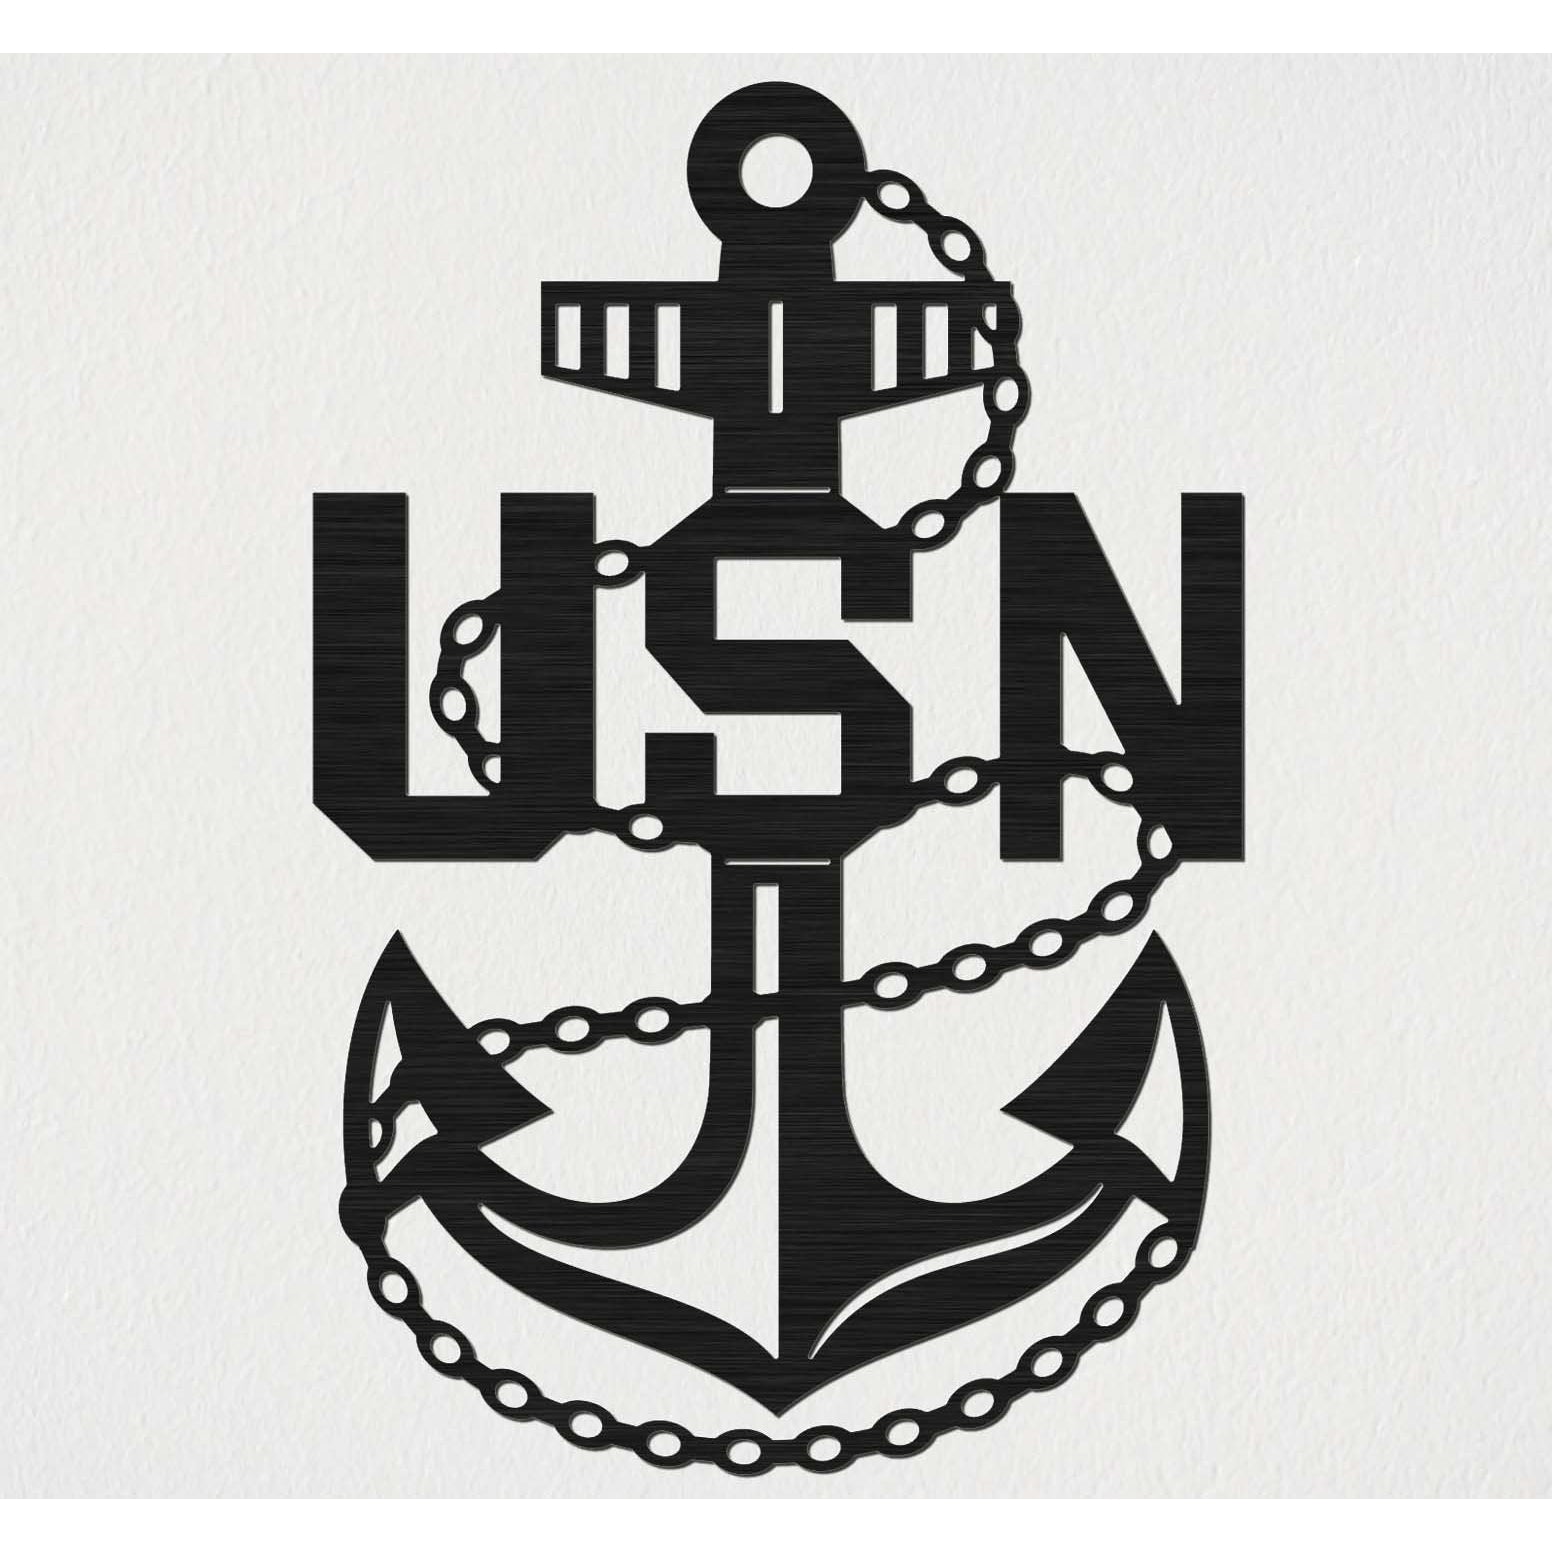 US Navy Anchor Badge-DXFforCNC.com-DXF Files cut ready cnc machines